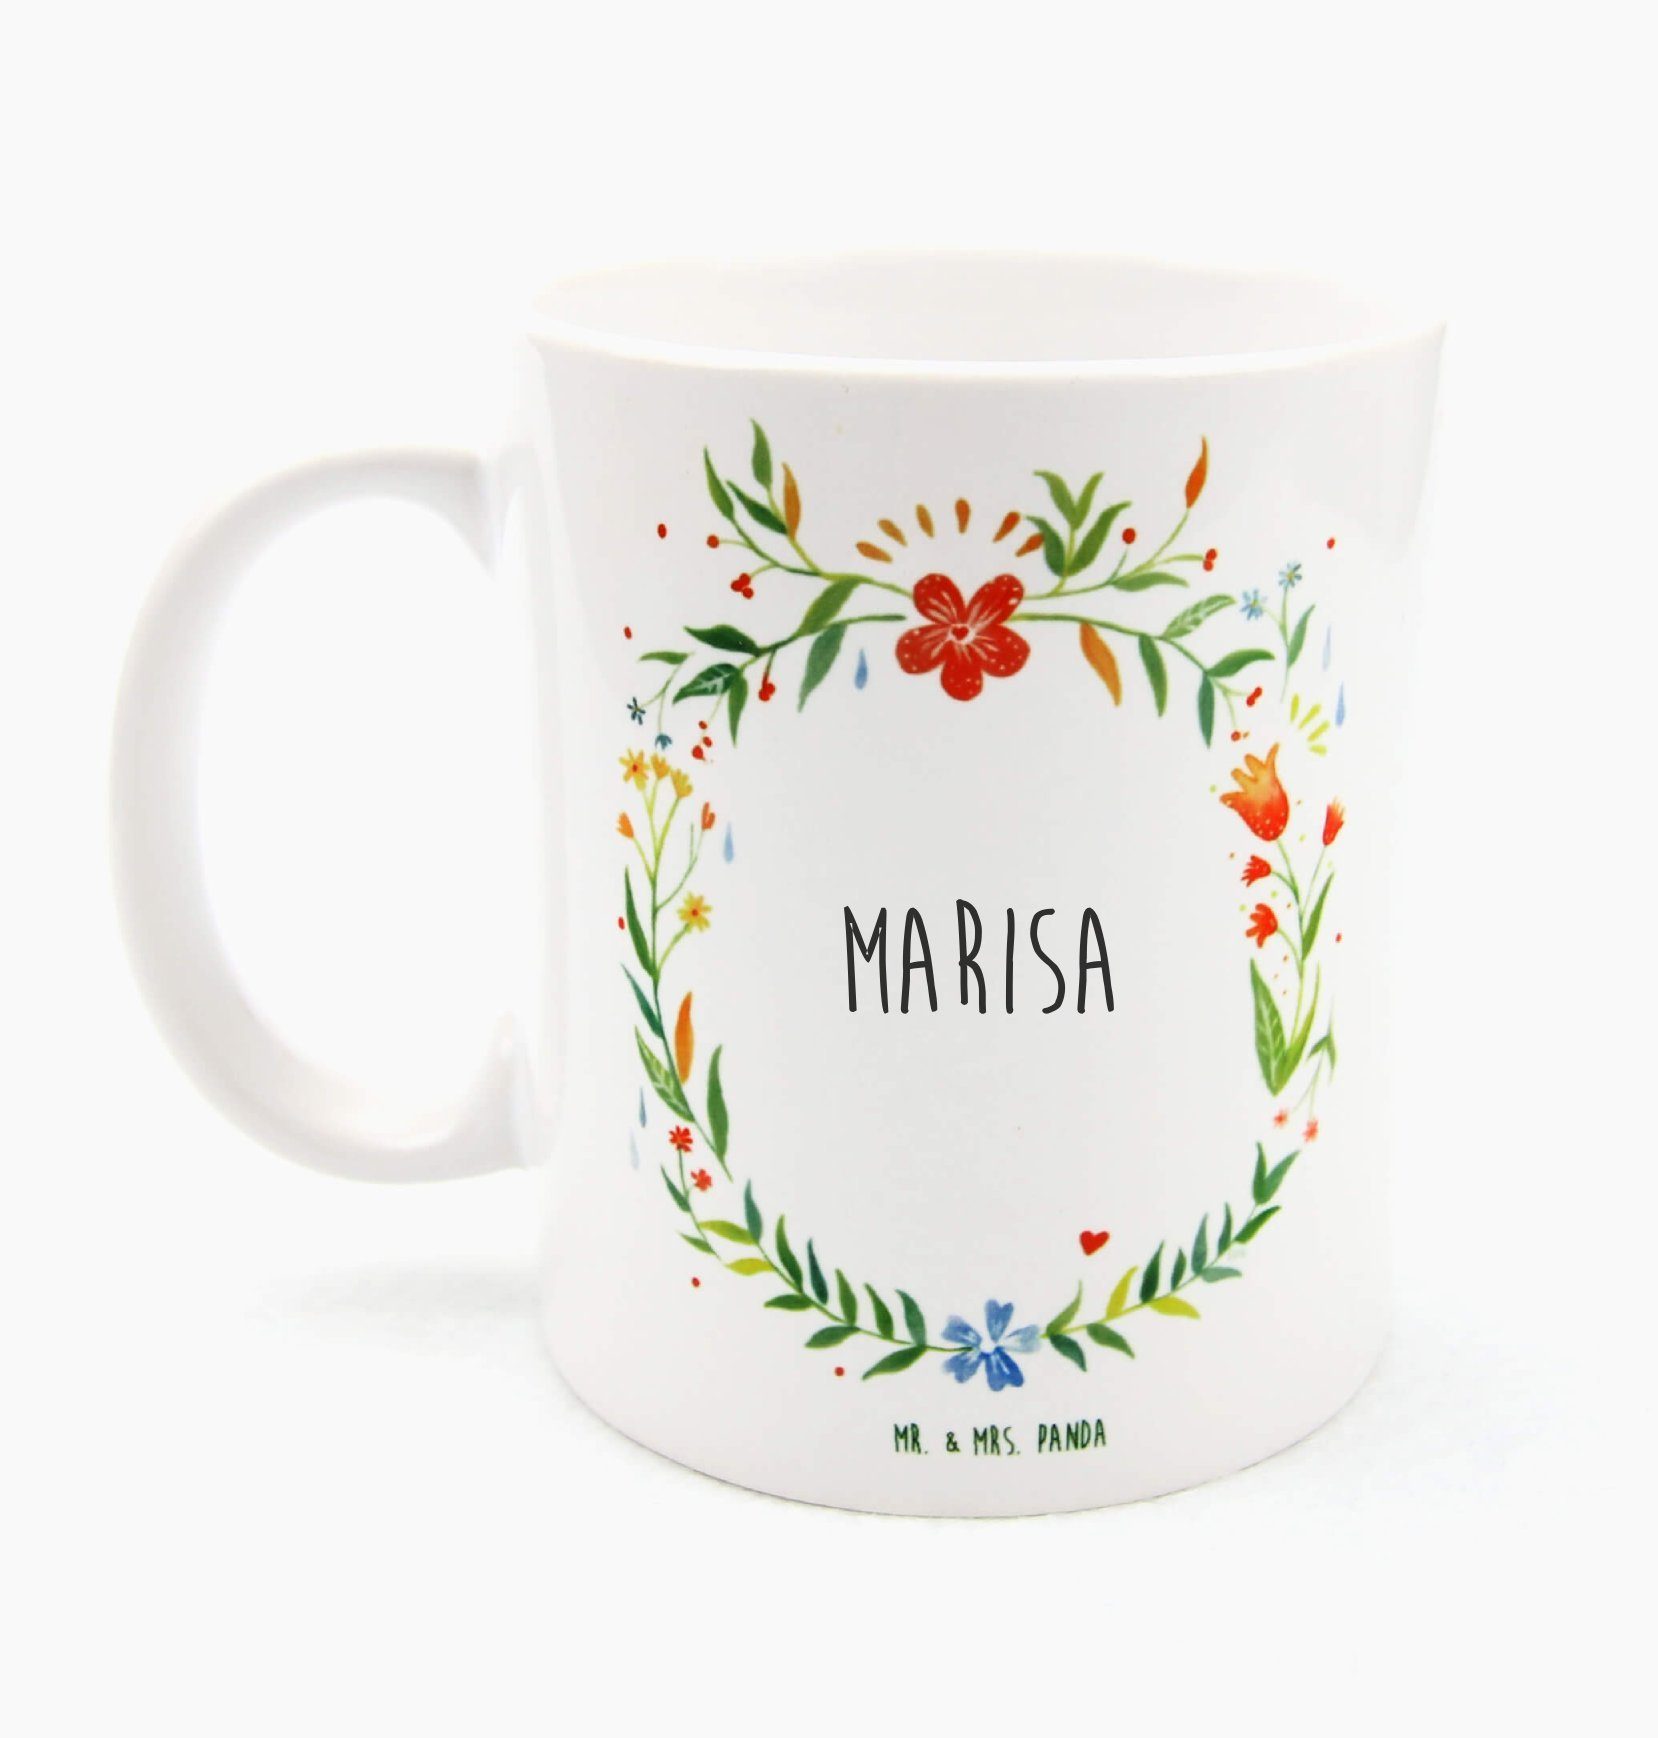 Mr. & Mrs. Panda Tasse Marisa - Geschenk, Porzellantasse, Keramiktasse, Tasse, Teetasse, Ges, Keramik